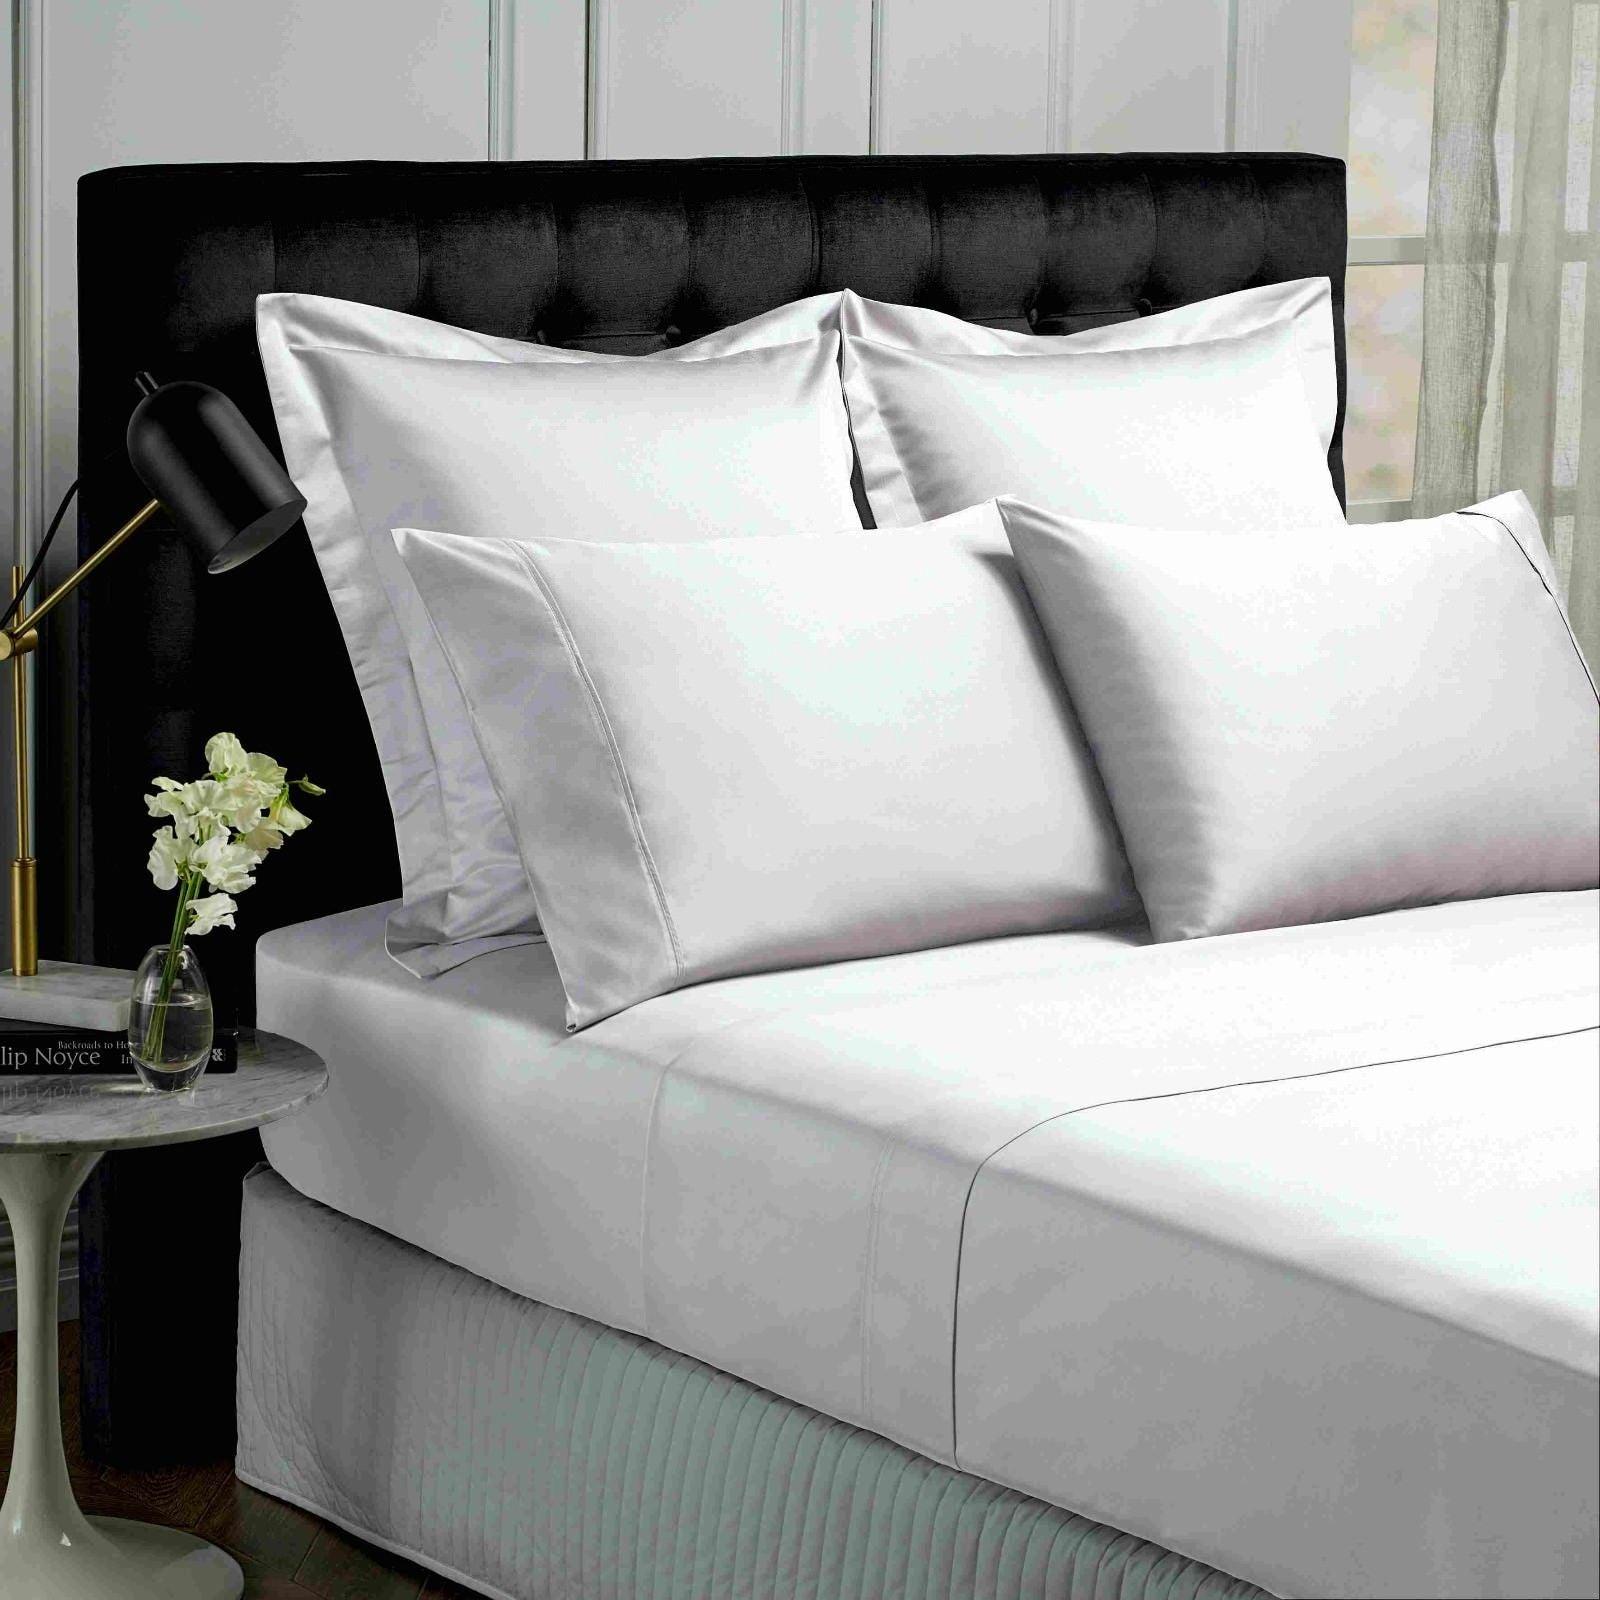 Park Avenue 500TC Soft Natural Bamboo Cotton Sheet Set Breathable Bedding - King - Blush